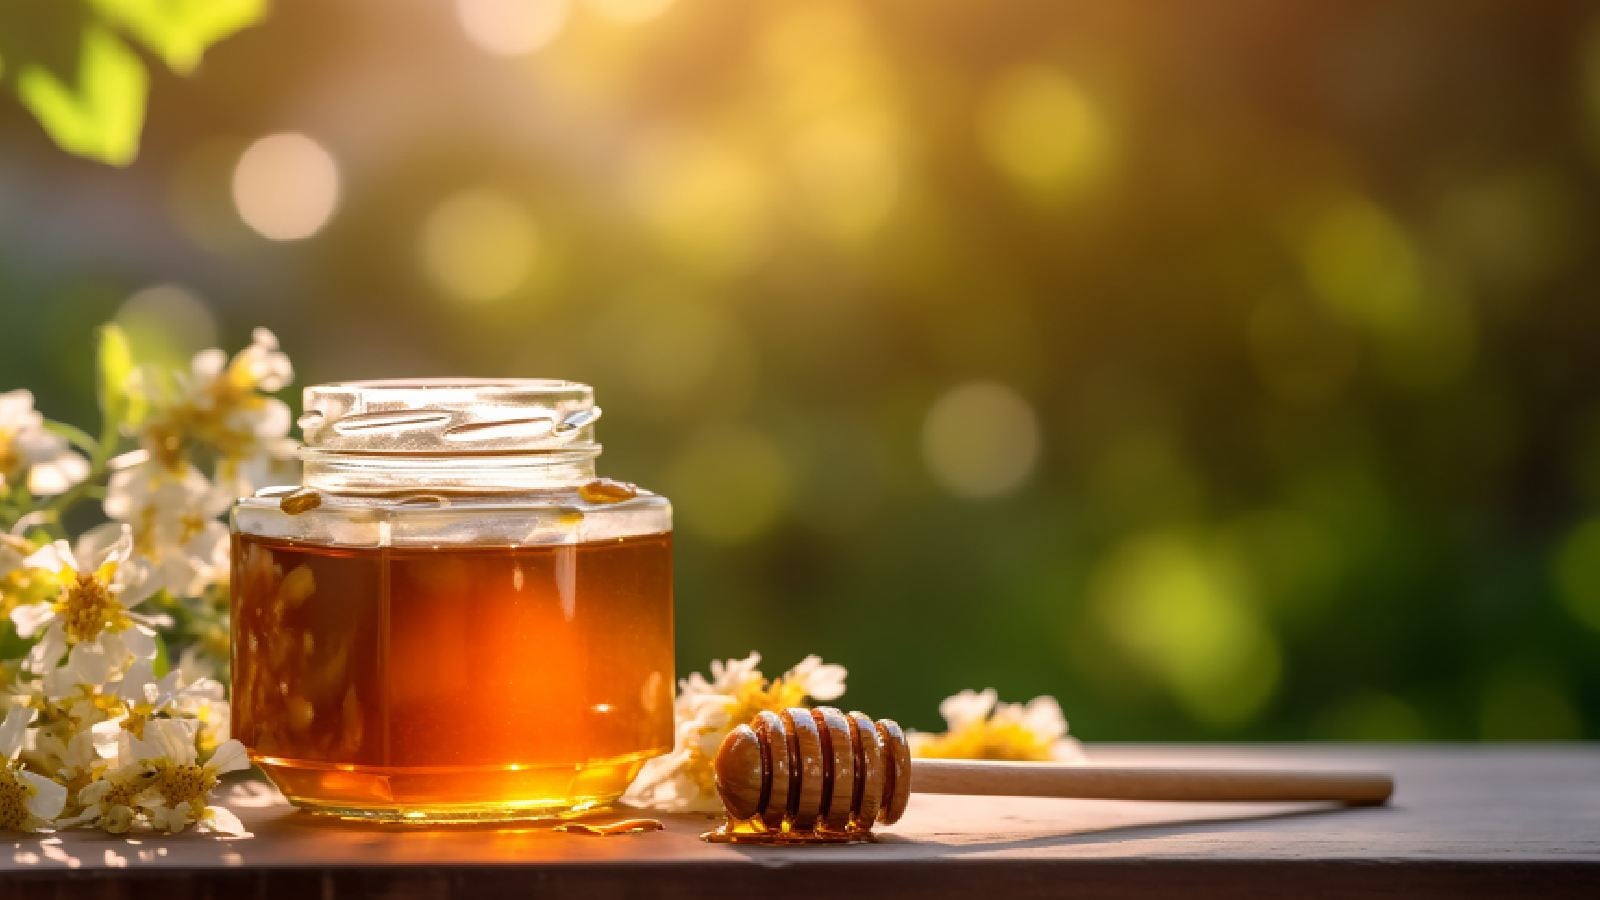 Best organic honey brands in India: 5 top picks for health benefits